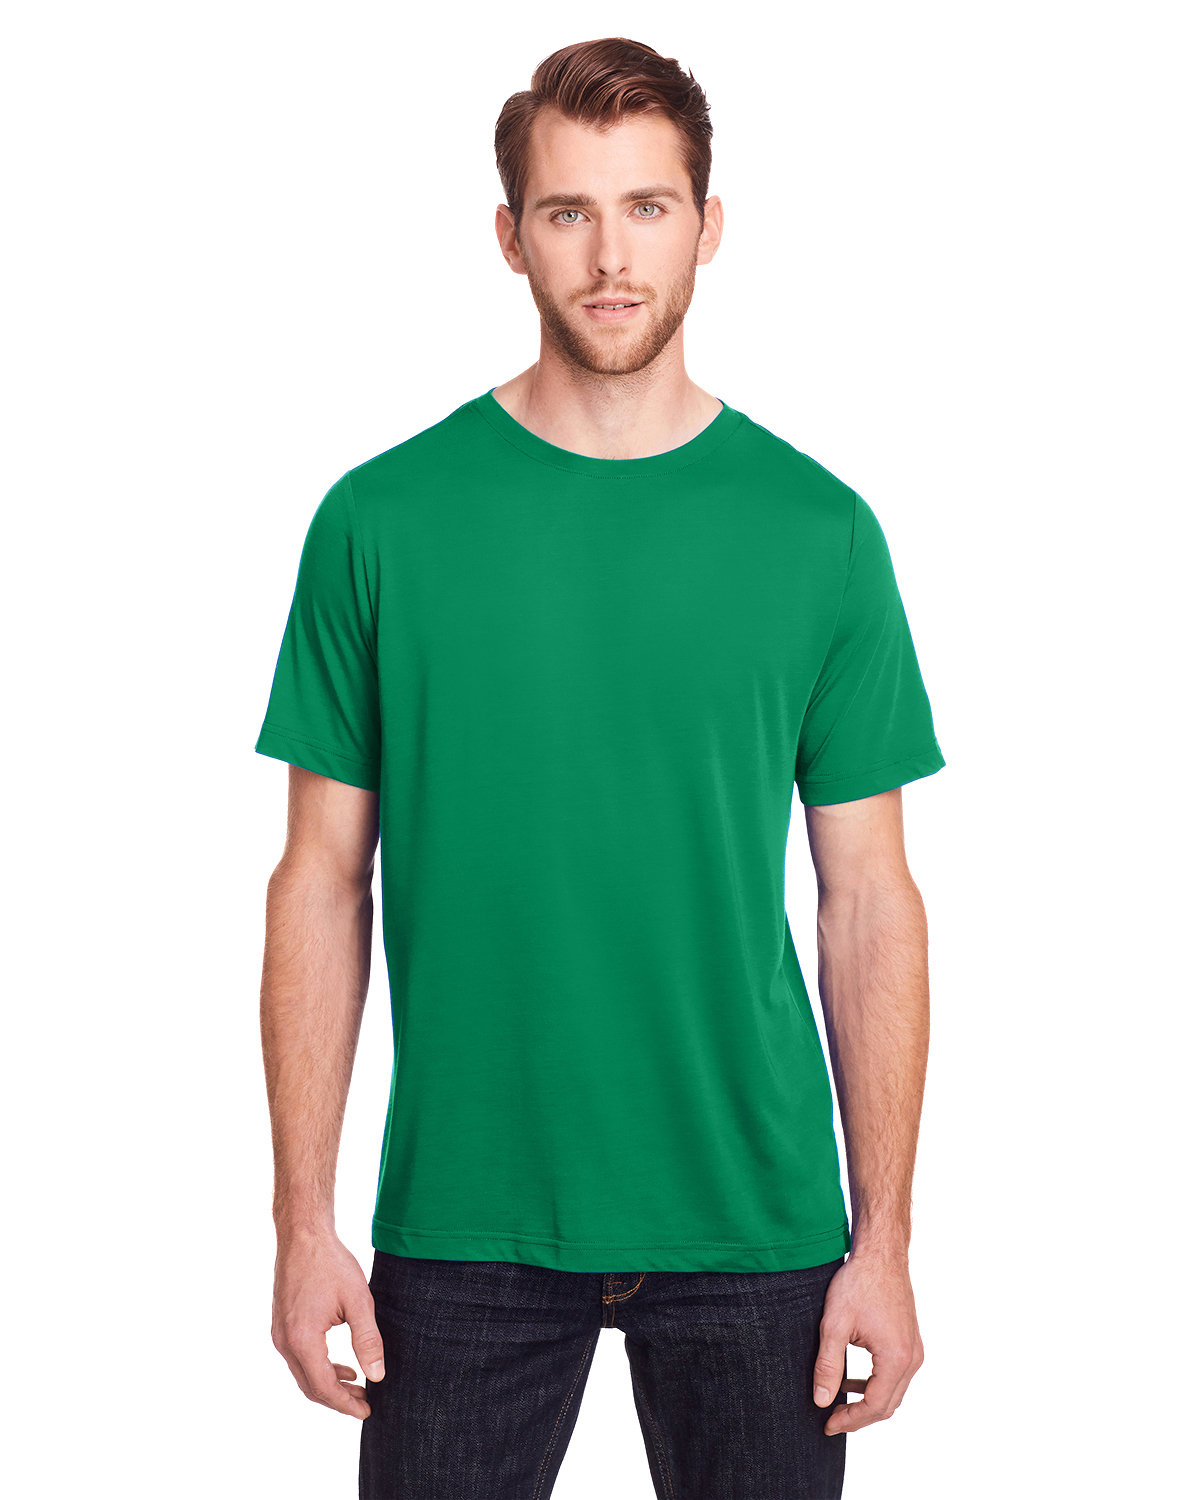 CORE365 Adult Fusion ChromaSoft Performance T-Shirt KELLY GREEN 